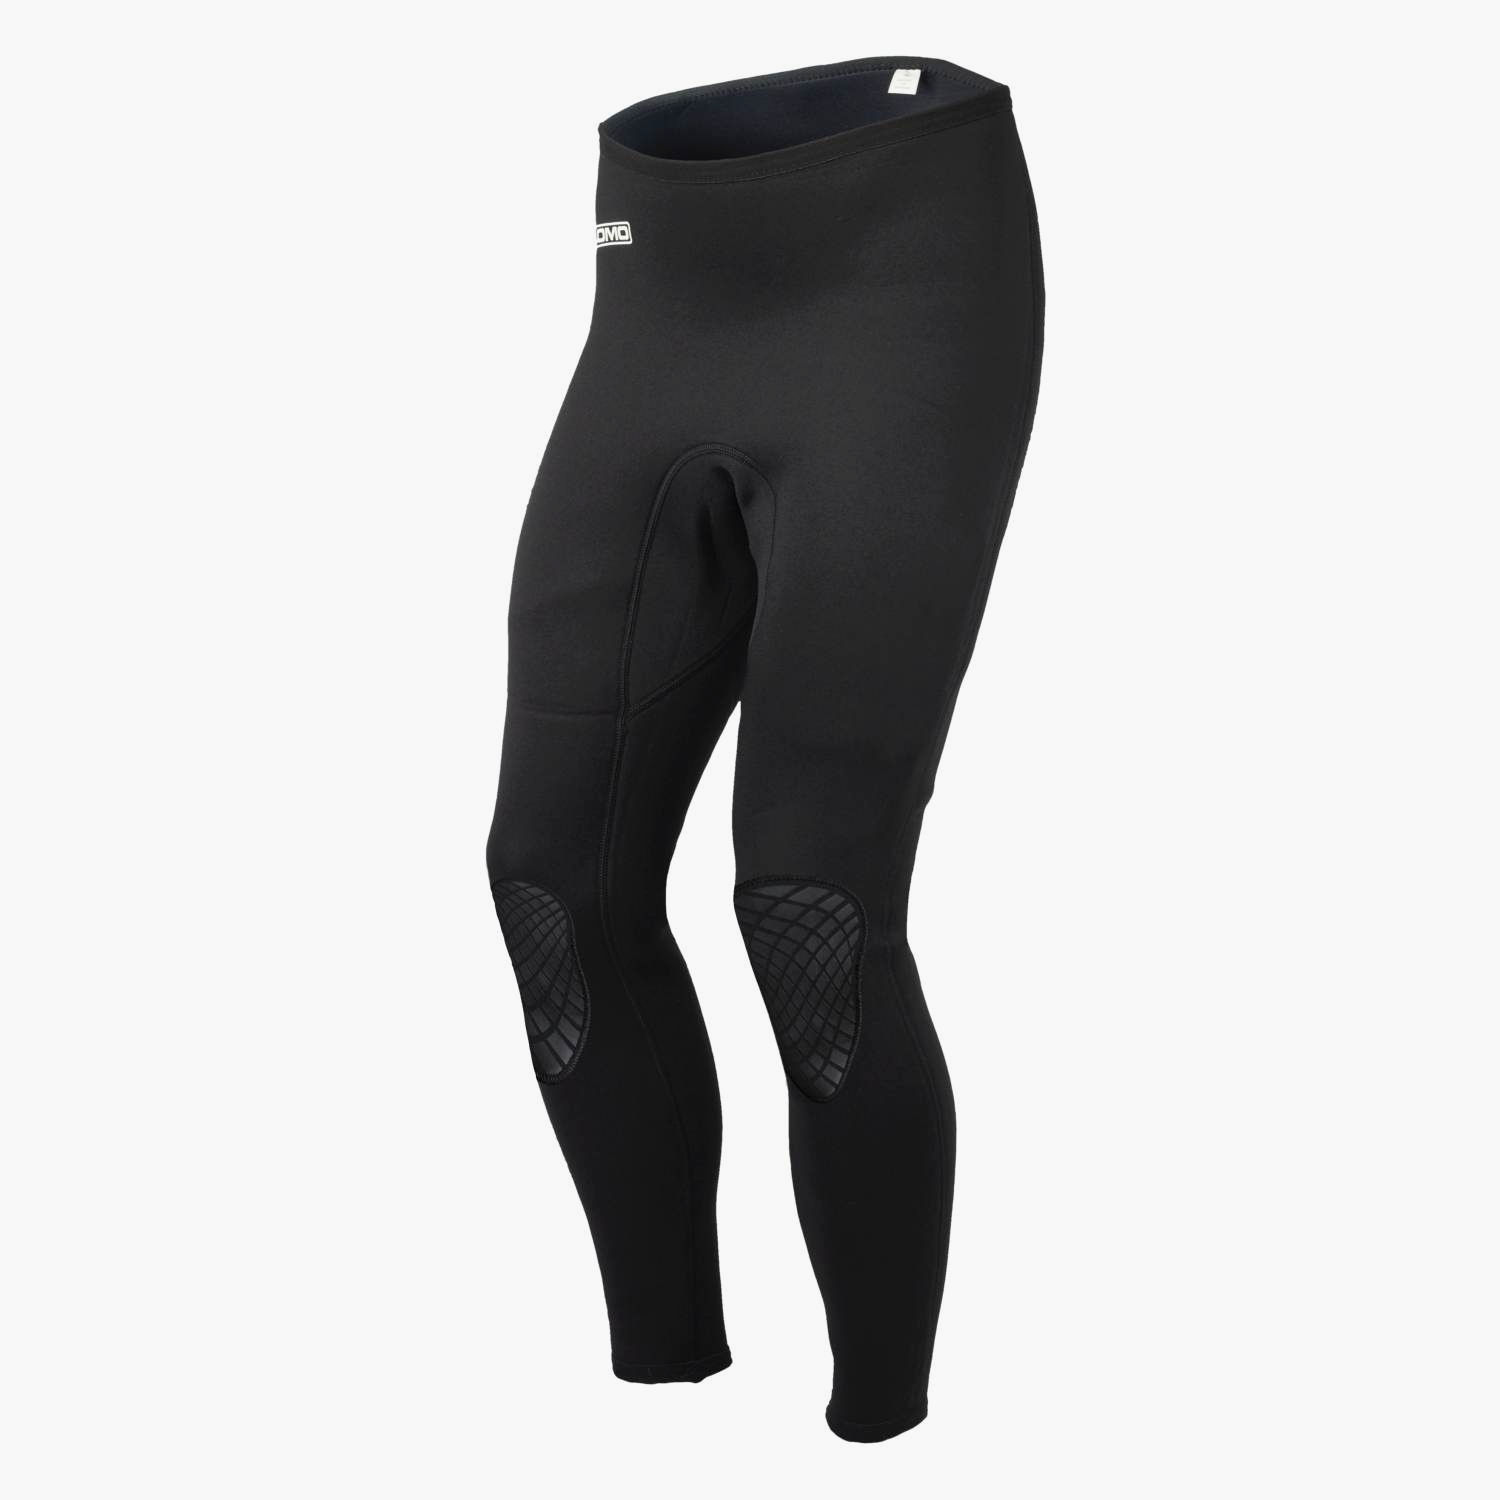 Prebent Neoprene Wetsuit Trousers  Black  Lomo Watersport UK Wetsuits  Dry Bags  Outdoor Gear